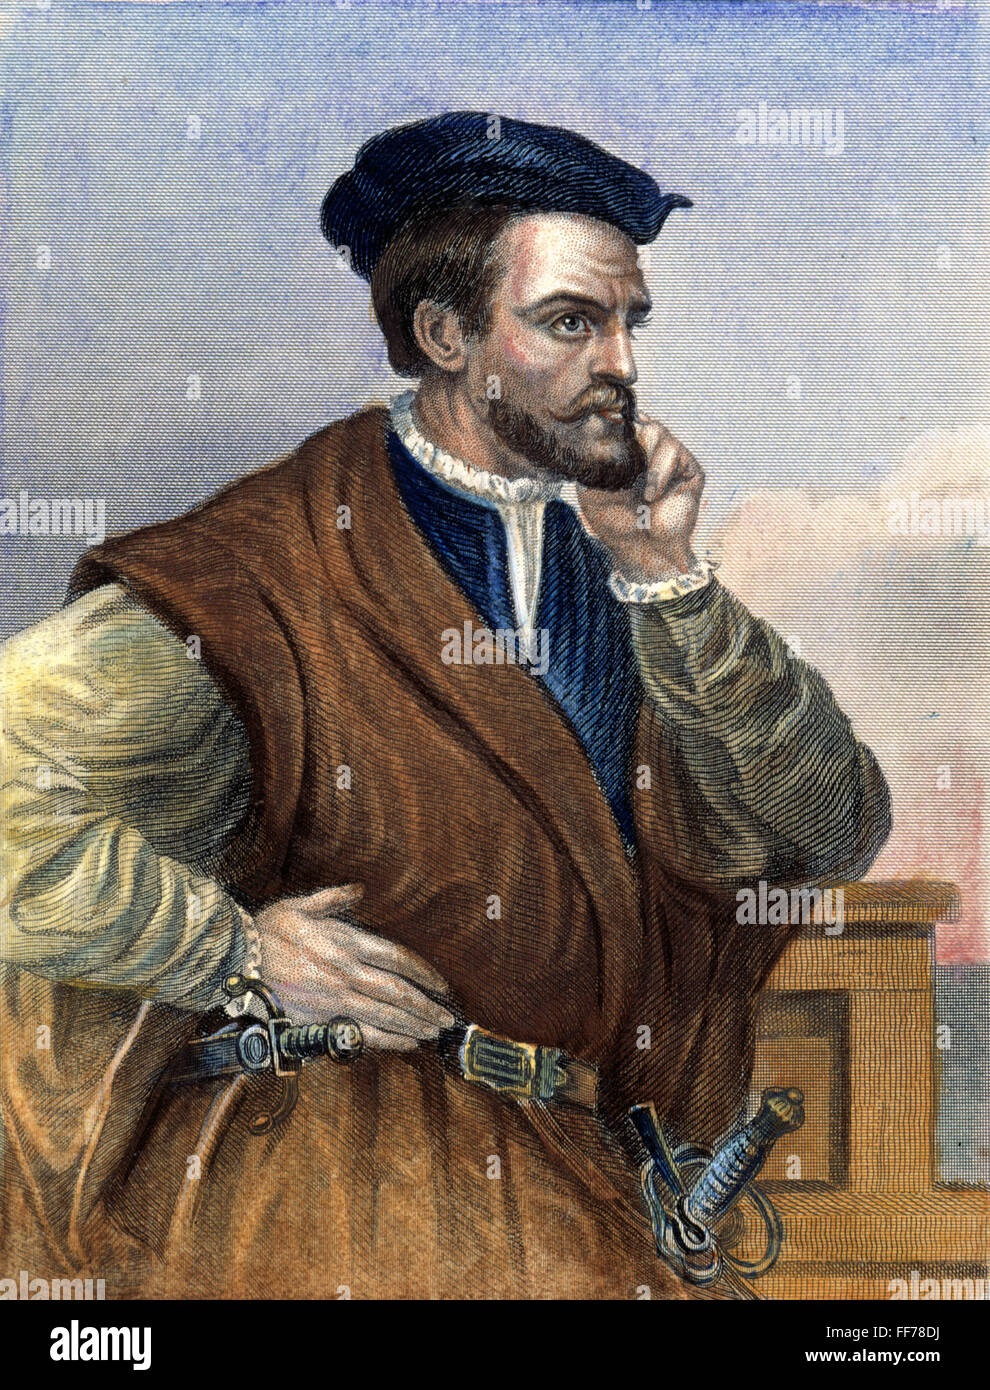 JACQUES CARTIER (1491-1557). /nFrench Seefahrer und Entdecker. Farbige Gravur. Stockfoto